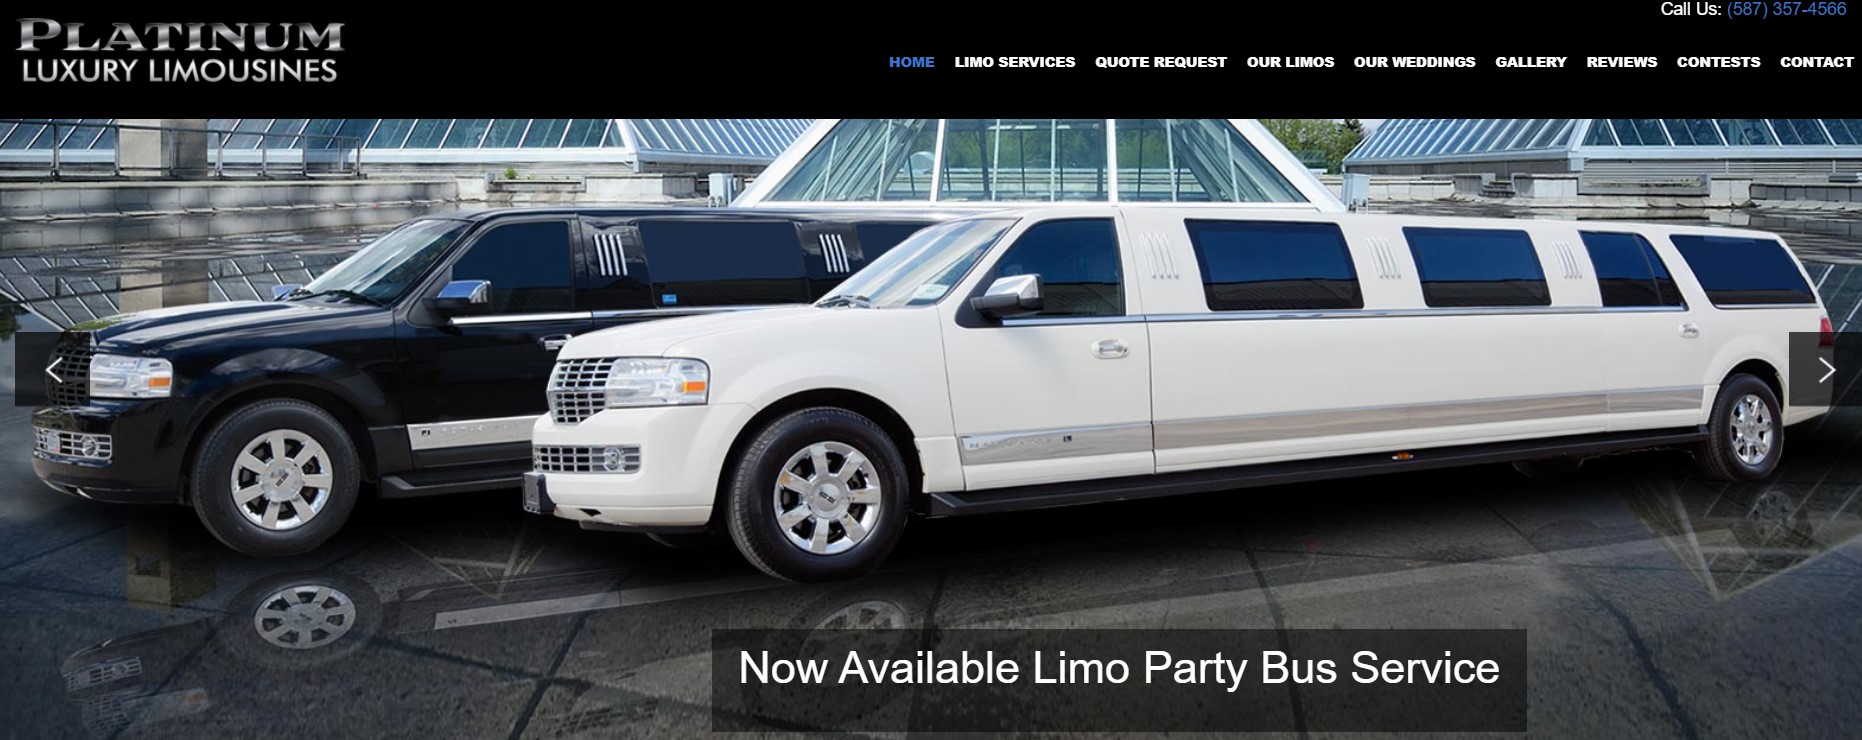 platinum limousine service in edmonton